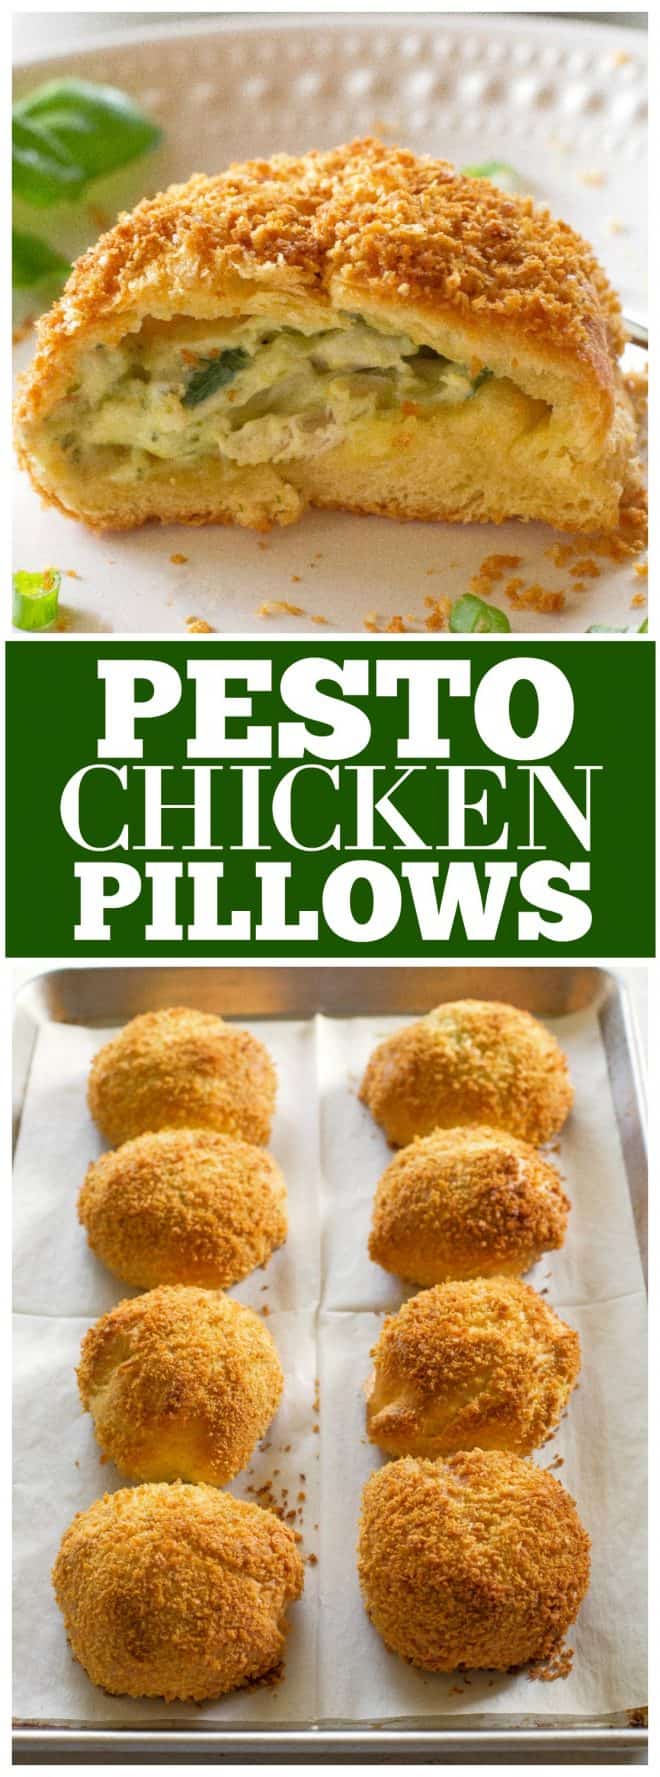 fb image - Pesto Chicken Pillows